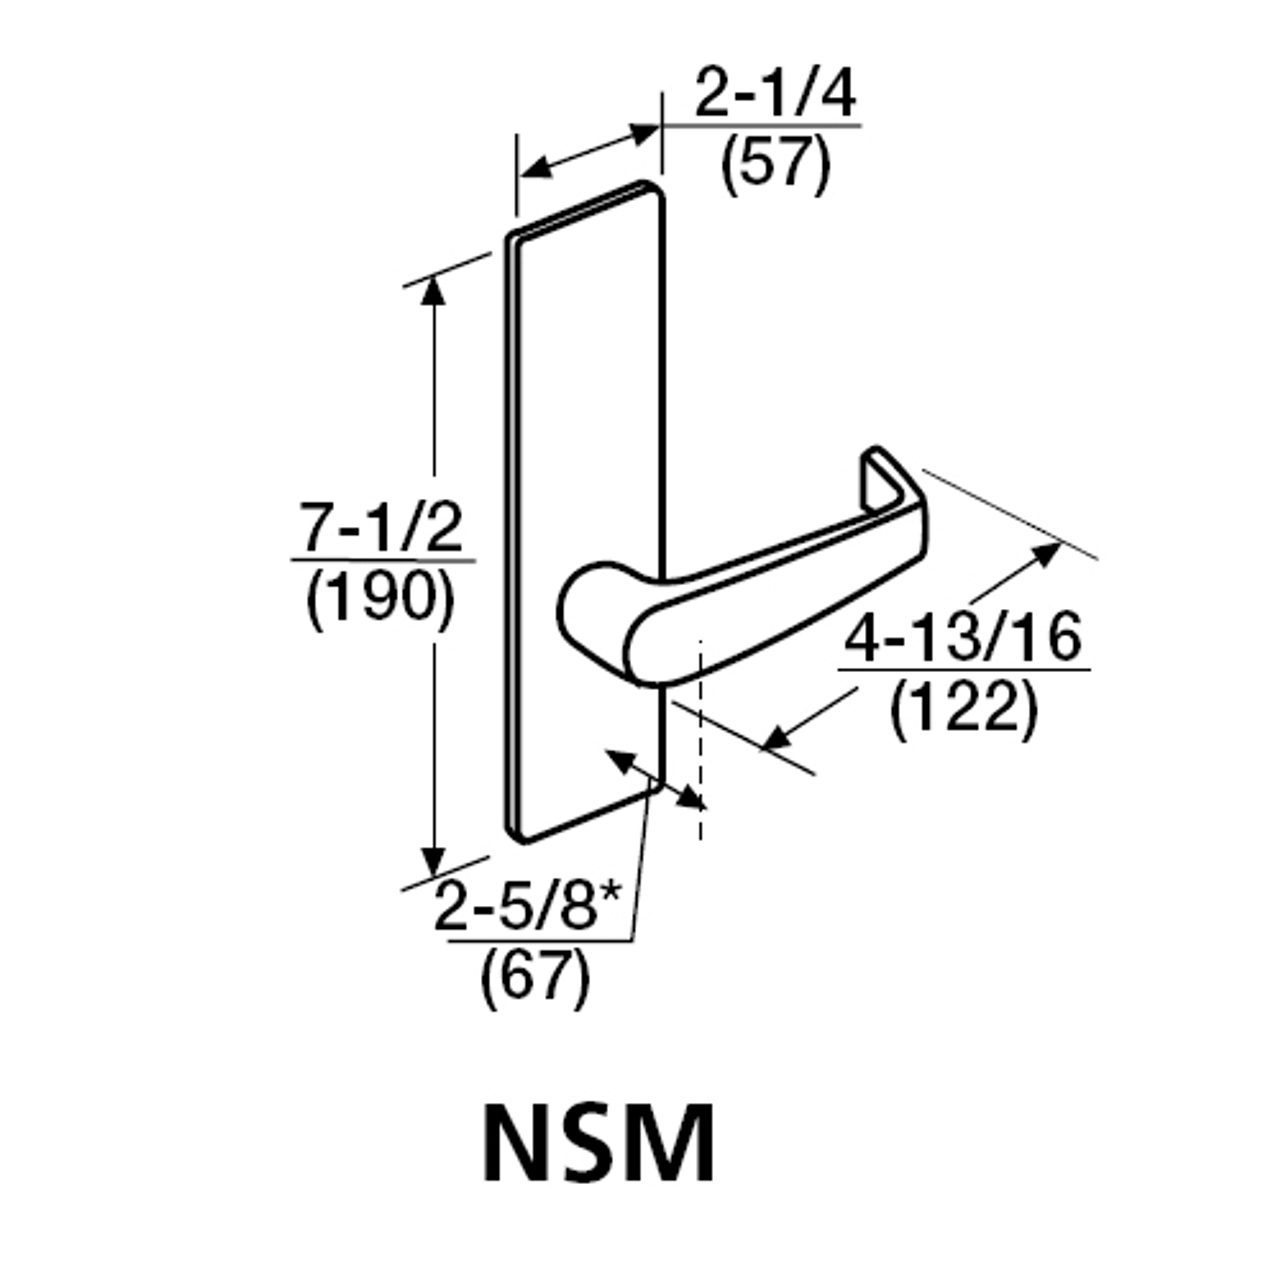 ML2052-NSM-618-CL7 Corbin Russwin ML2000 Series IC 7-Pin Less Core Mortise Classroom Intruder Locksets with Newport Lever in Bright Nickel